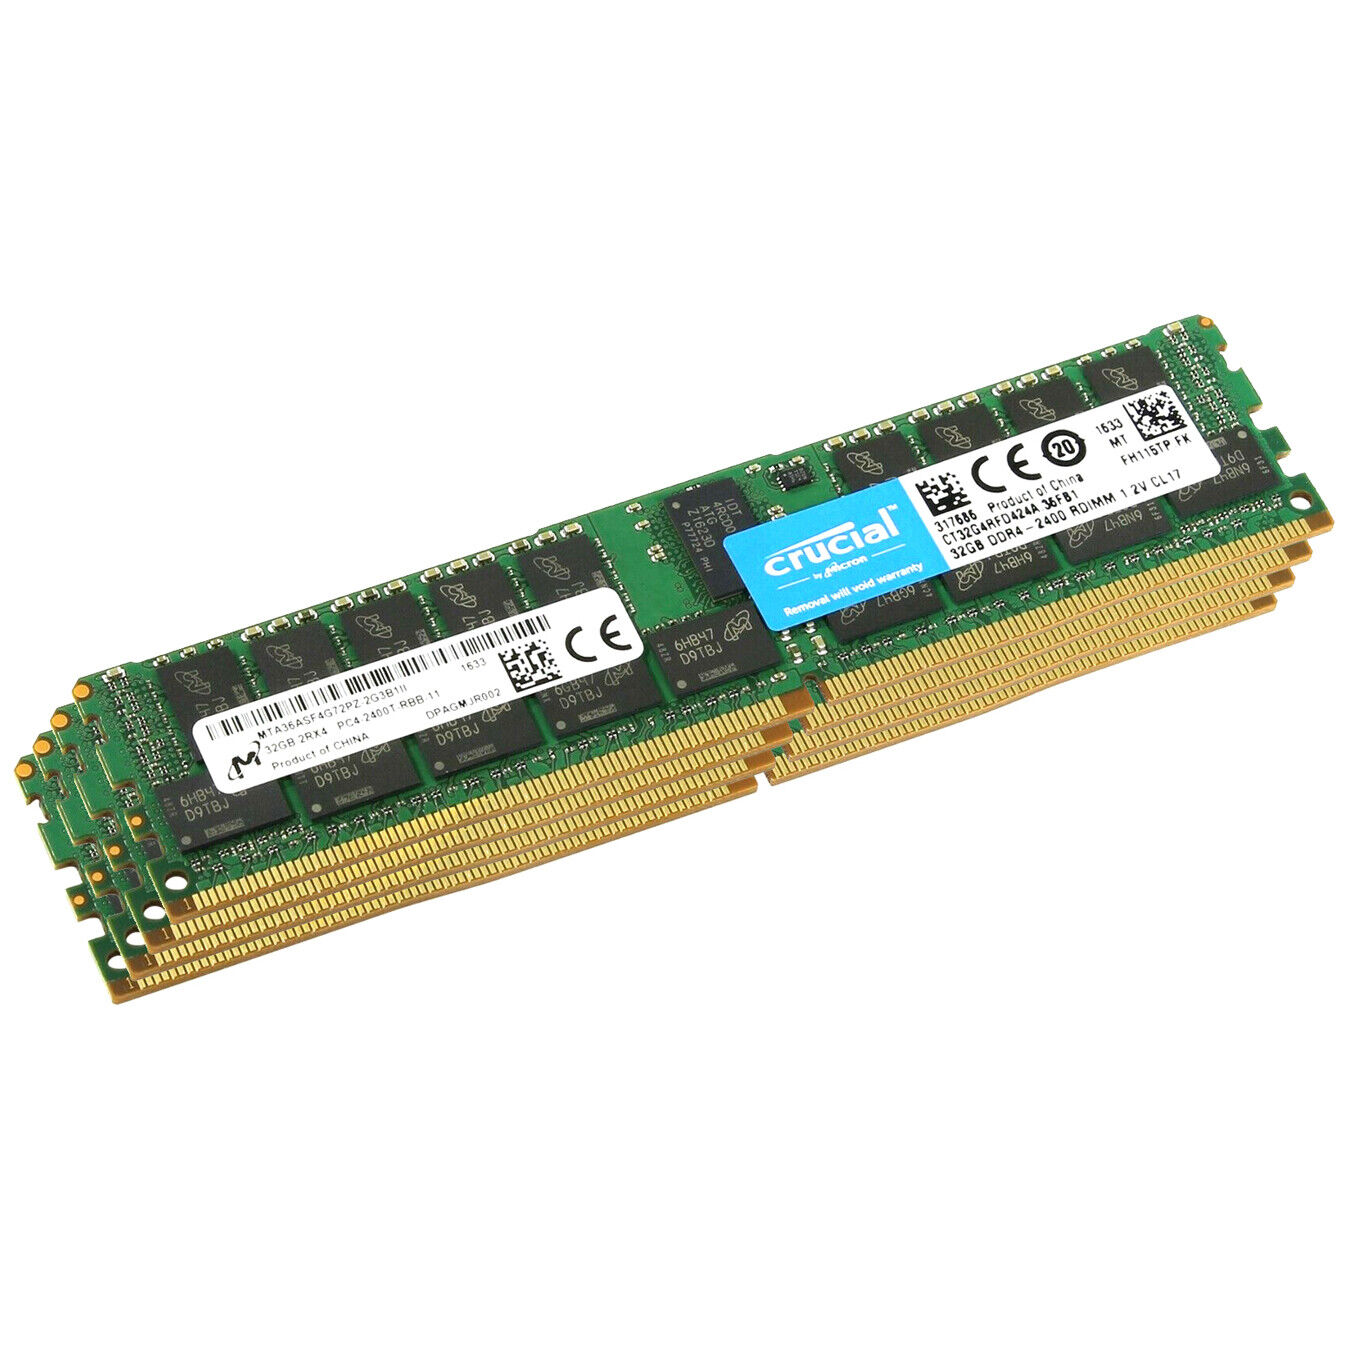 Crucial 128GB (4x 32GB) 2400MHz DDR4 ECC RDIMM PC4-19200 1.2V 2RX4 Server Memory